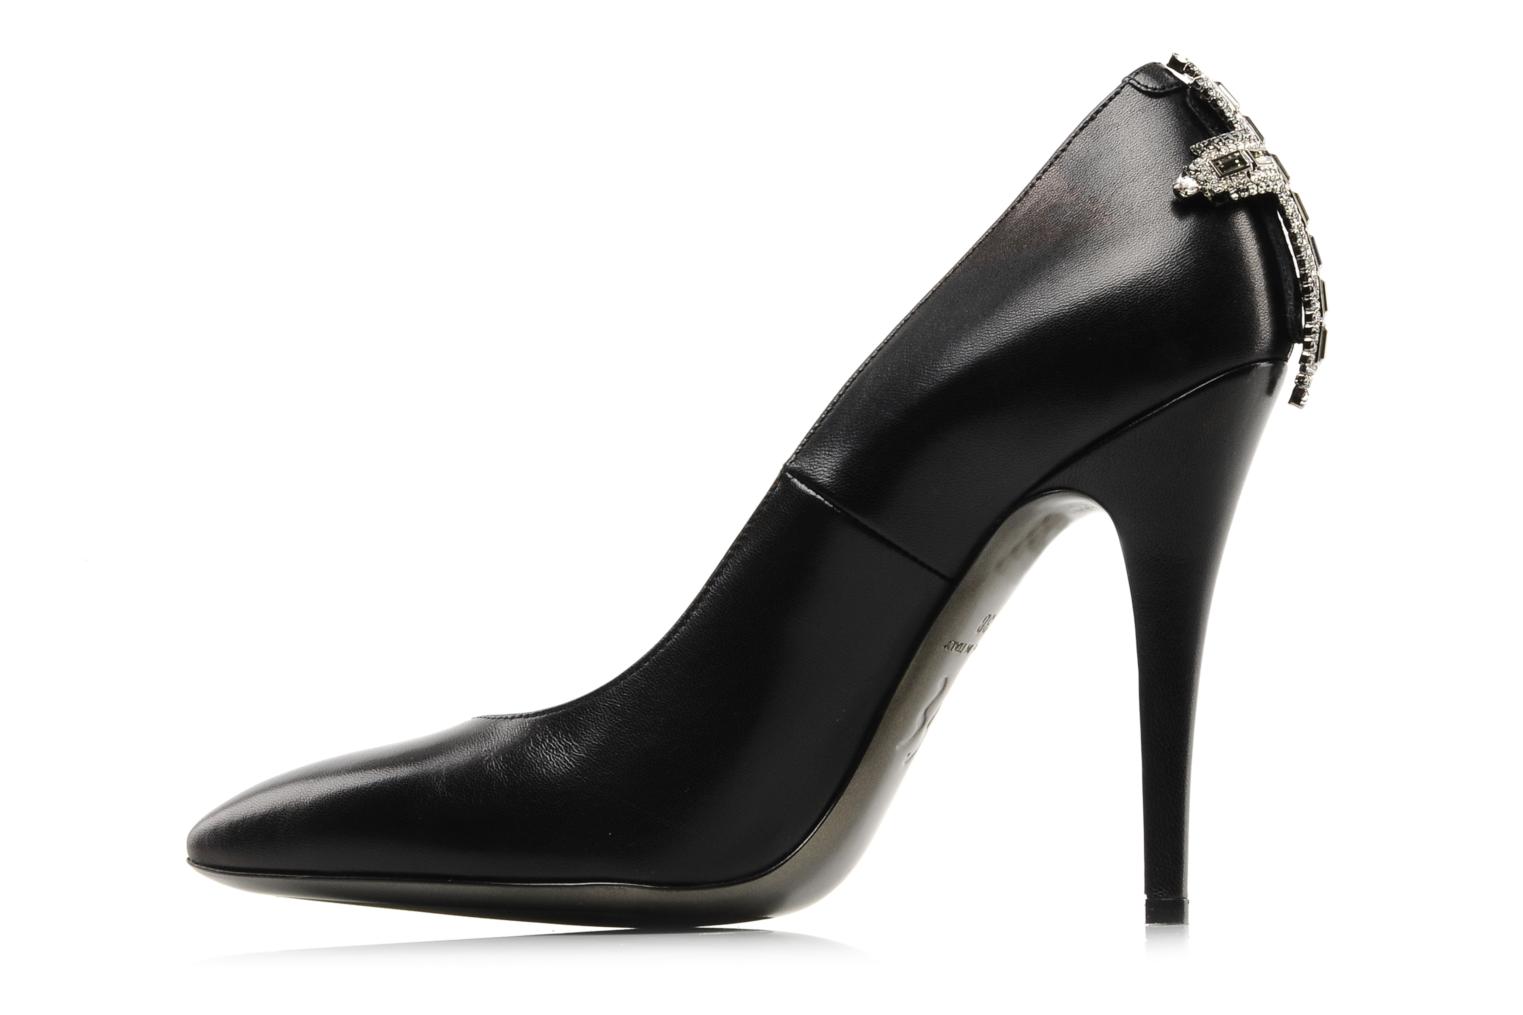 Ernesto Esposito Pazina High heels in Black at Sarenza.co.uk (66598)